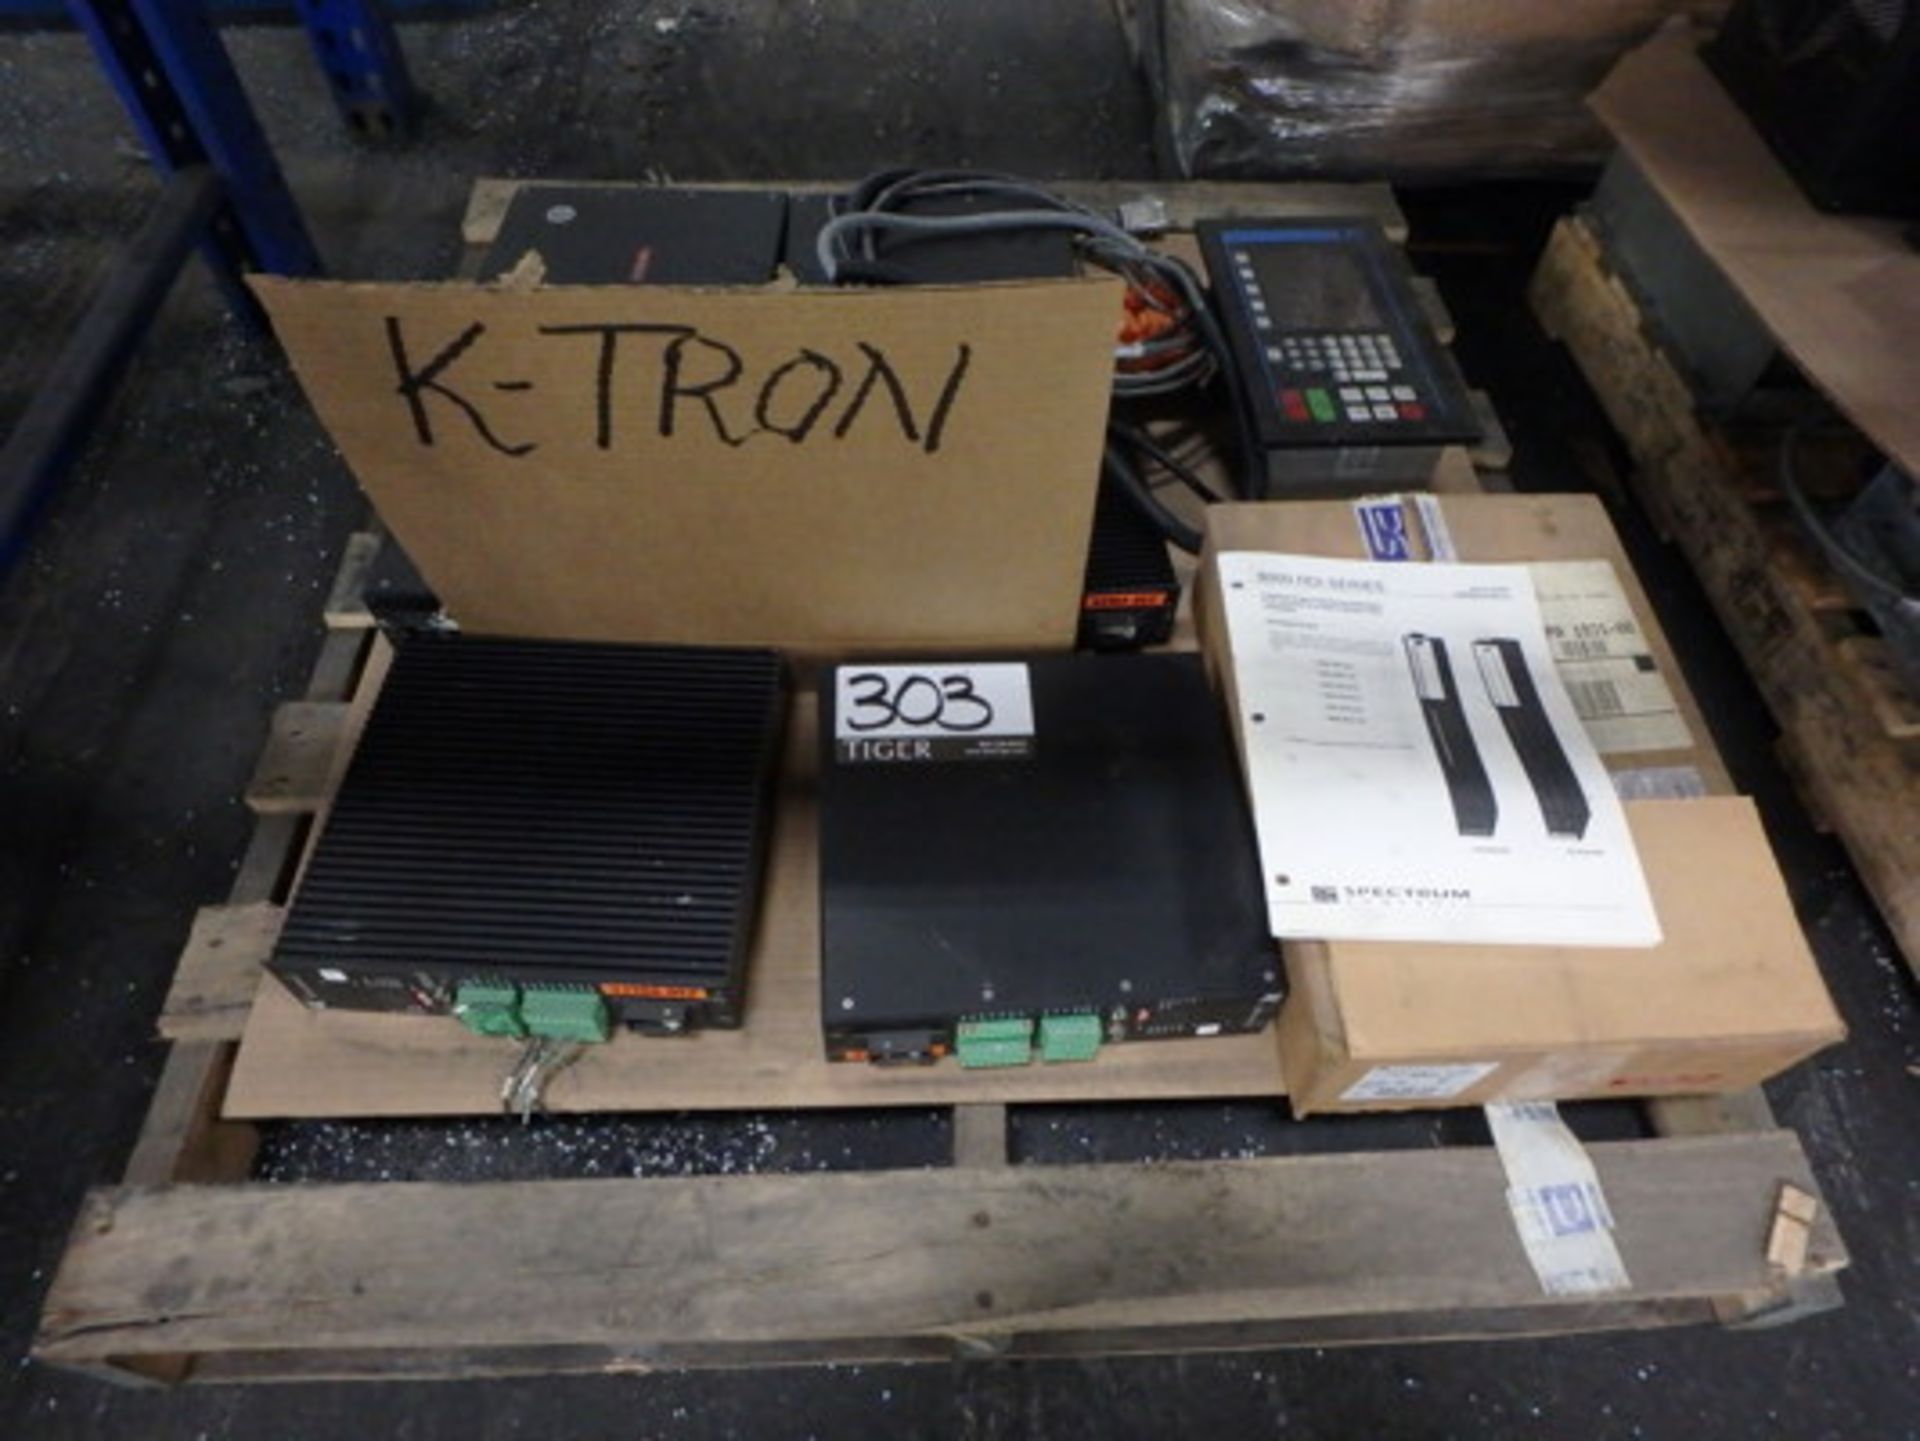 Lot of: Spectrum Controls 8000 RDI Series 16-Channel Input Module, (New in Box), (6) K-Tron